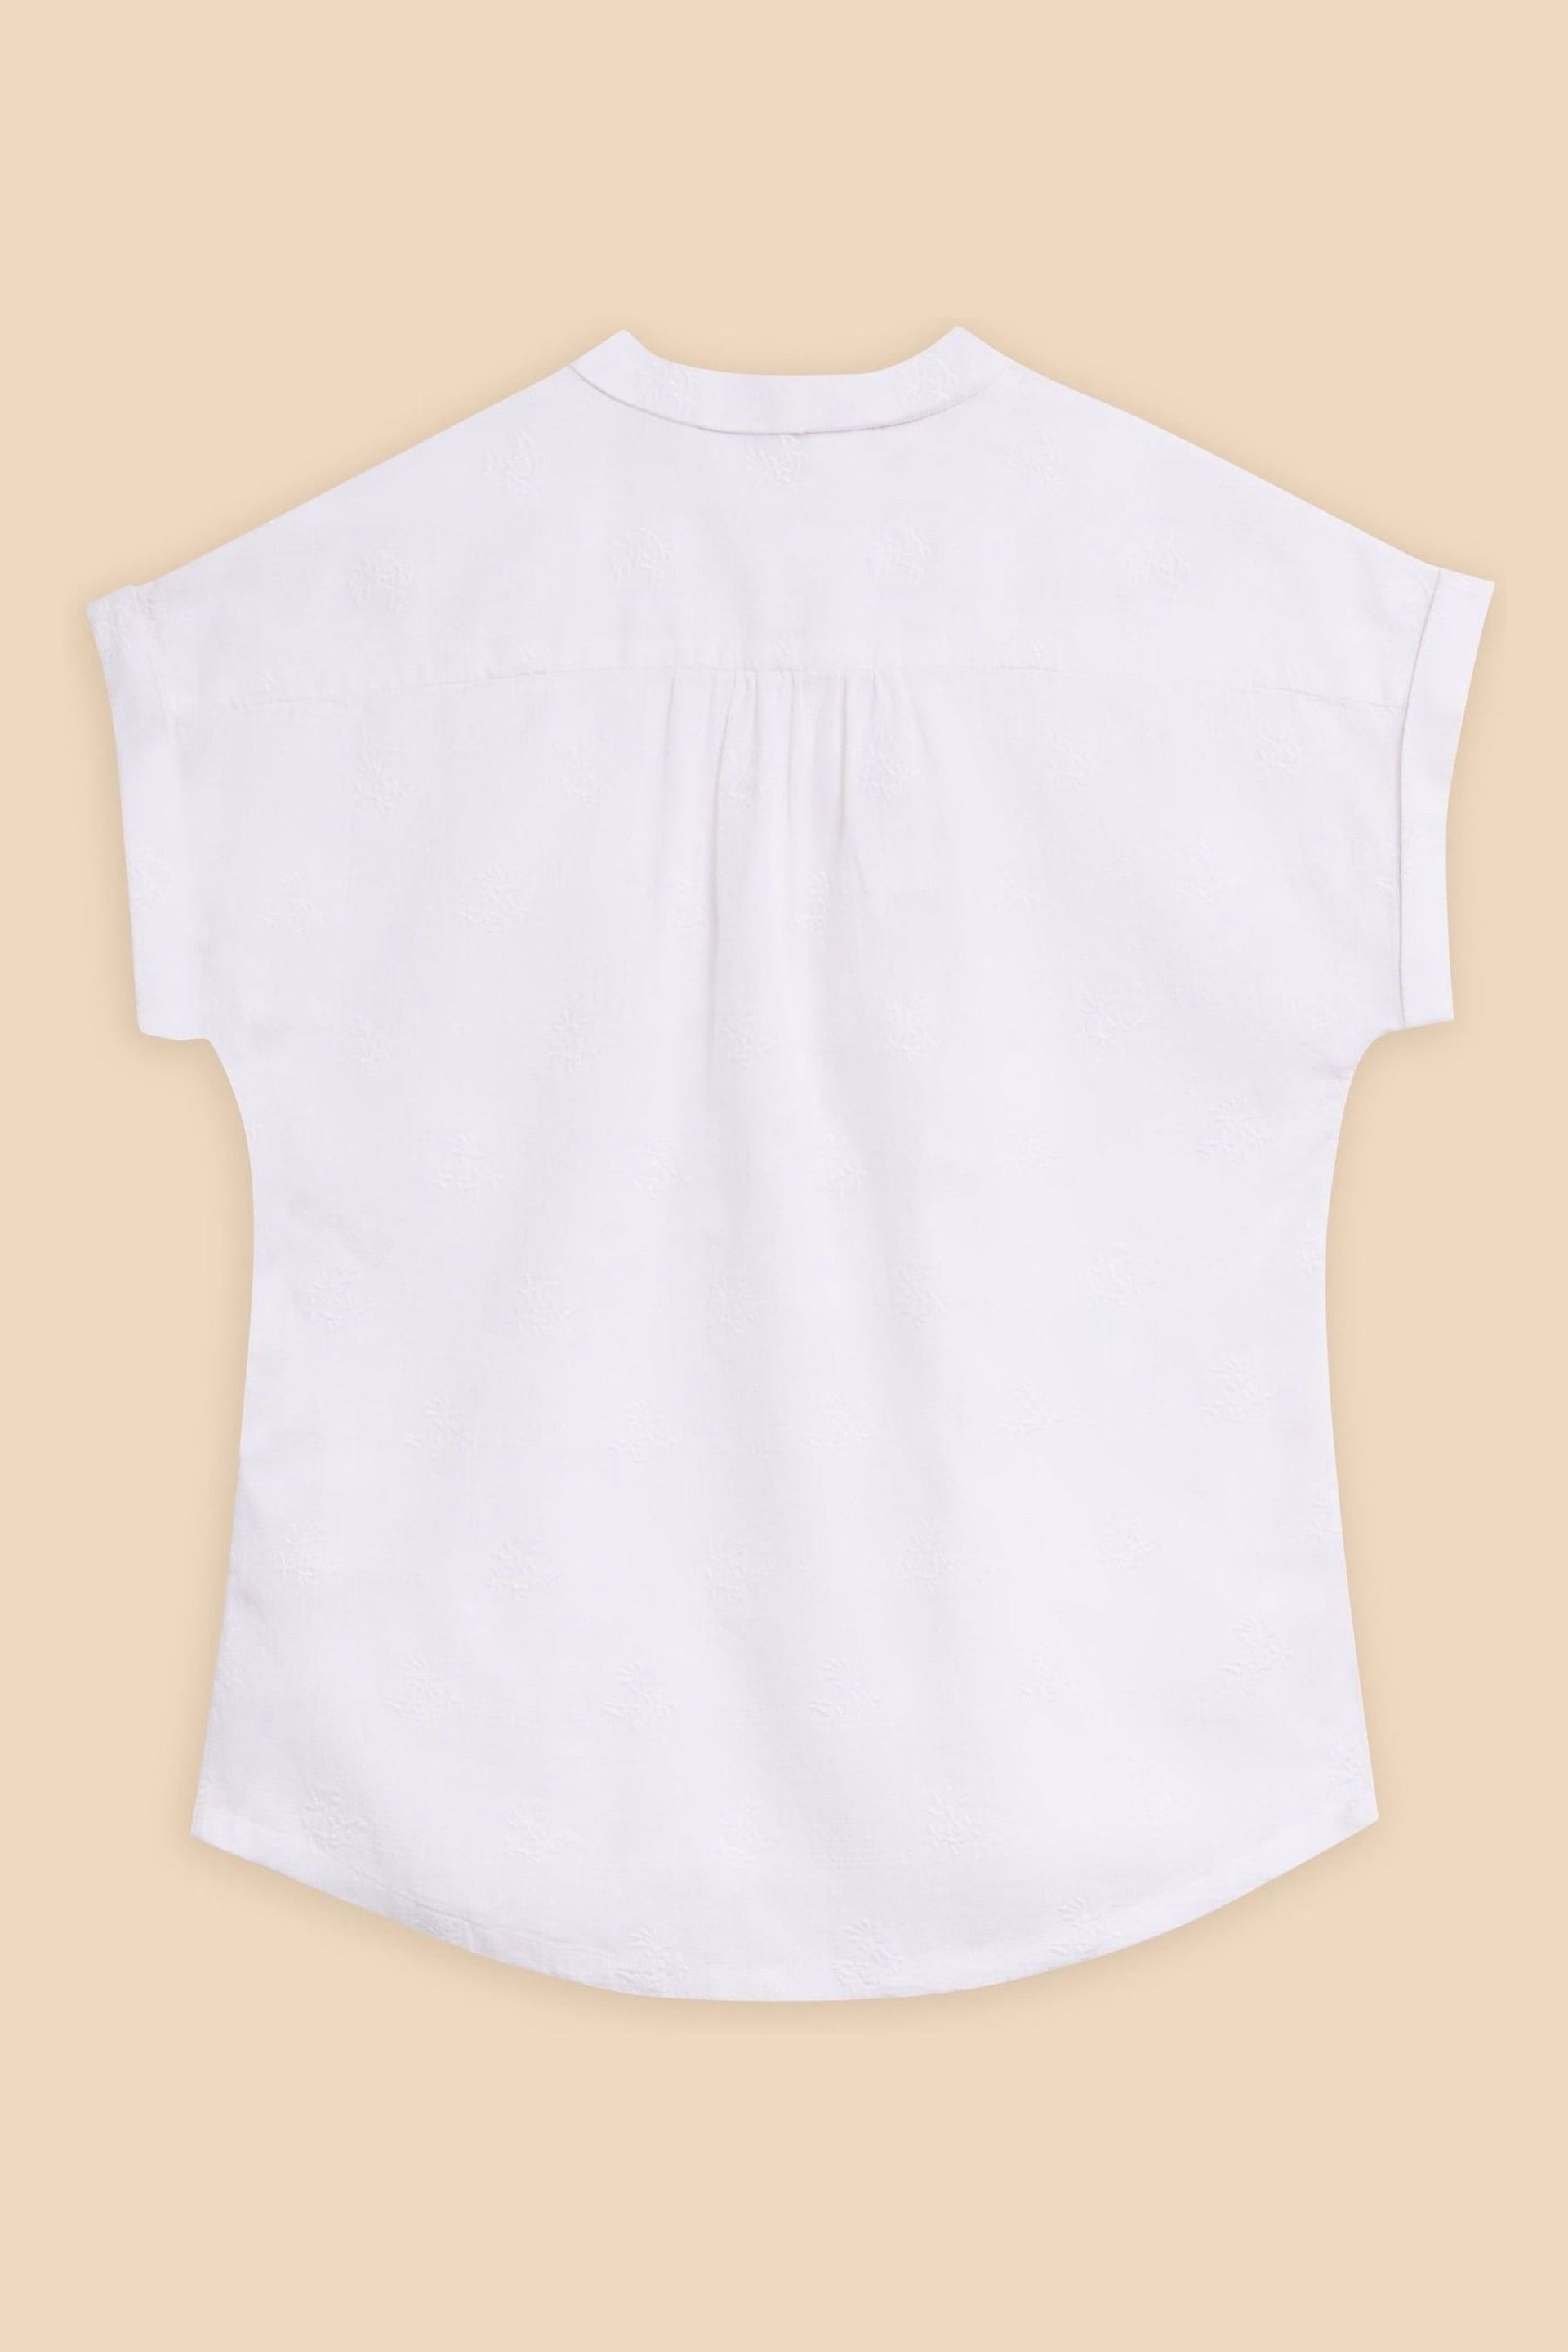 White Stuff White Embroidered Ellie Shirt - Image 6 of 7